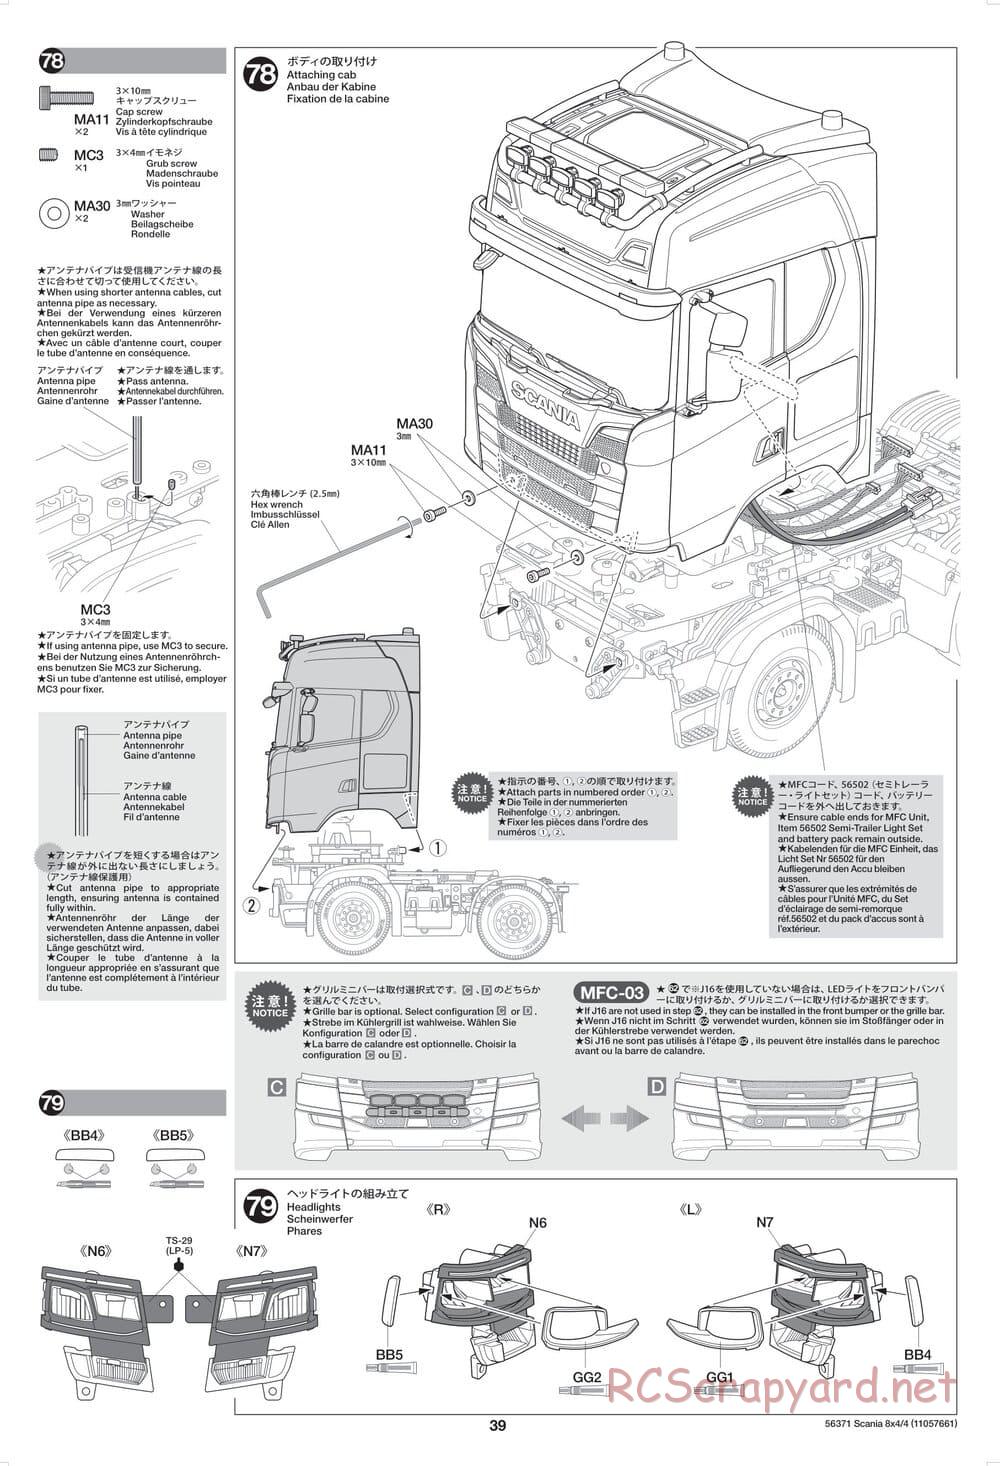 Tamiya - Scania 770 S 8x4/4 Chassis - Manual - Page 39